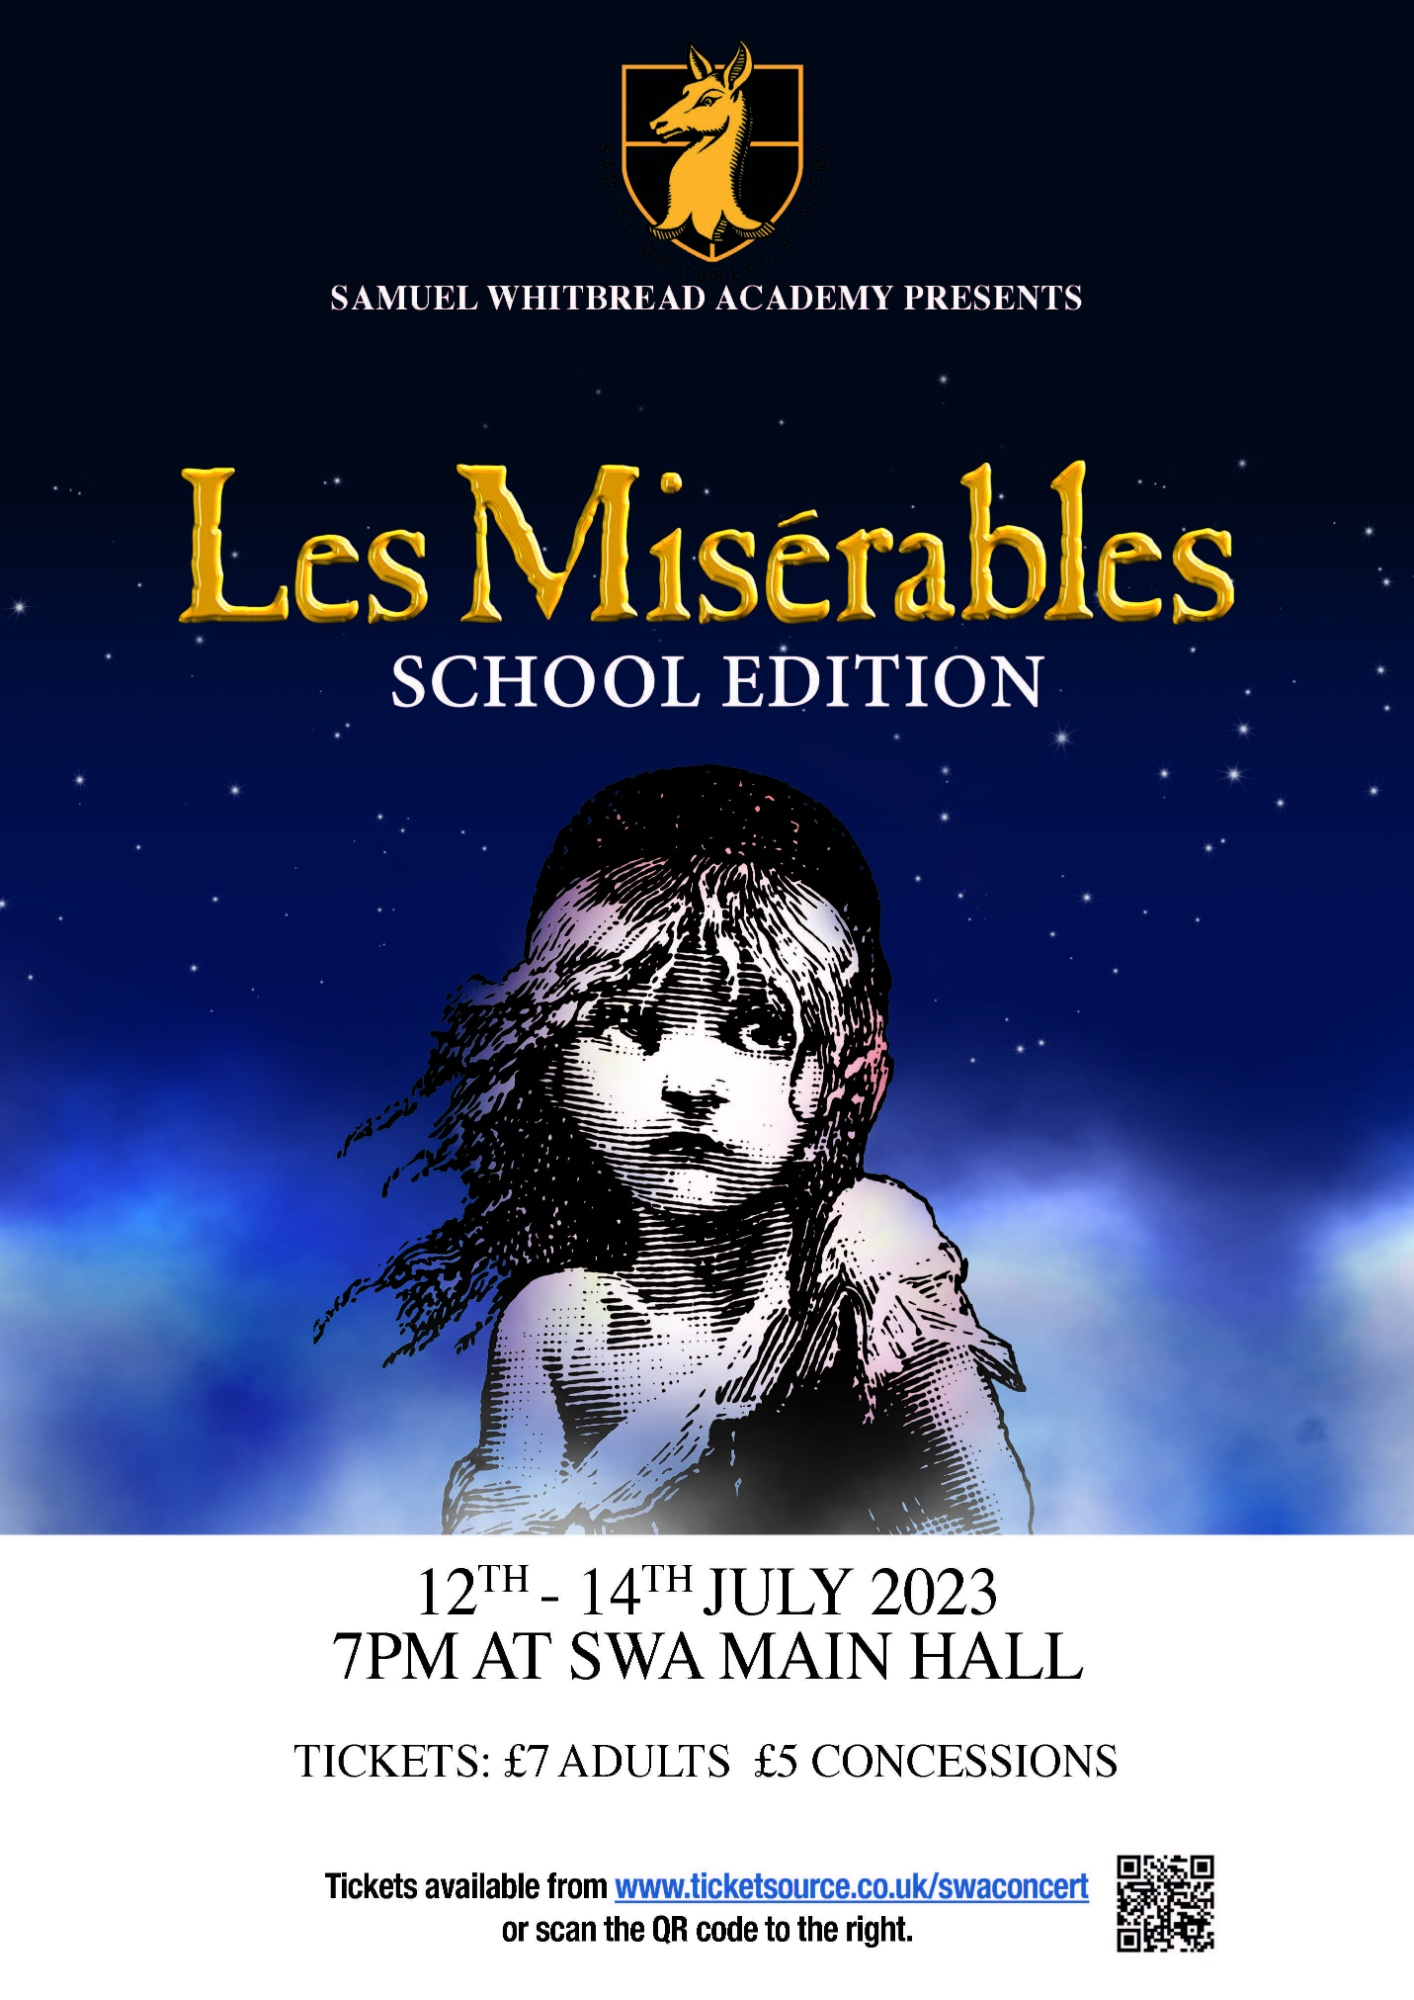 Les Miserable school edition poster